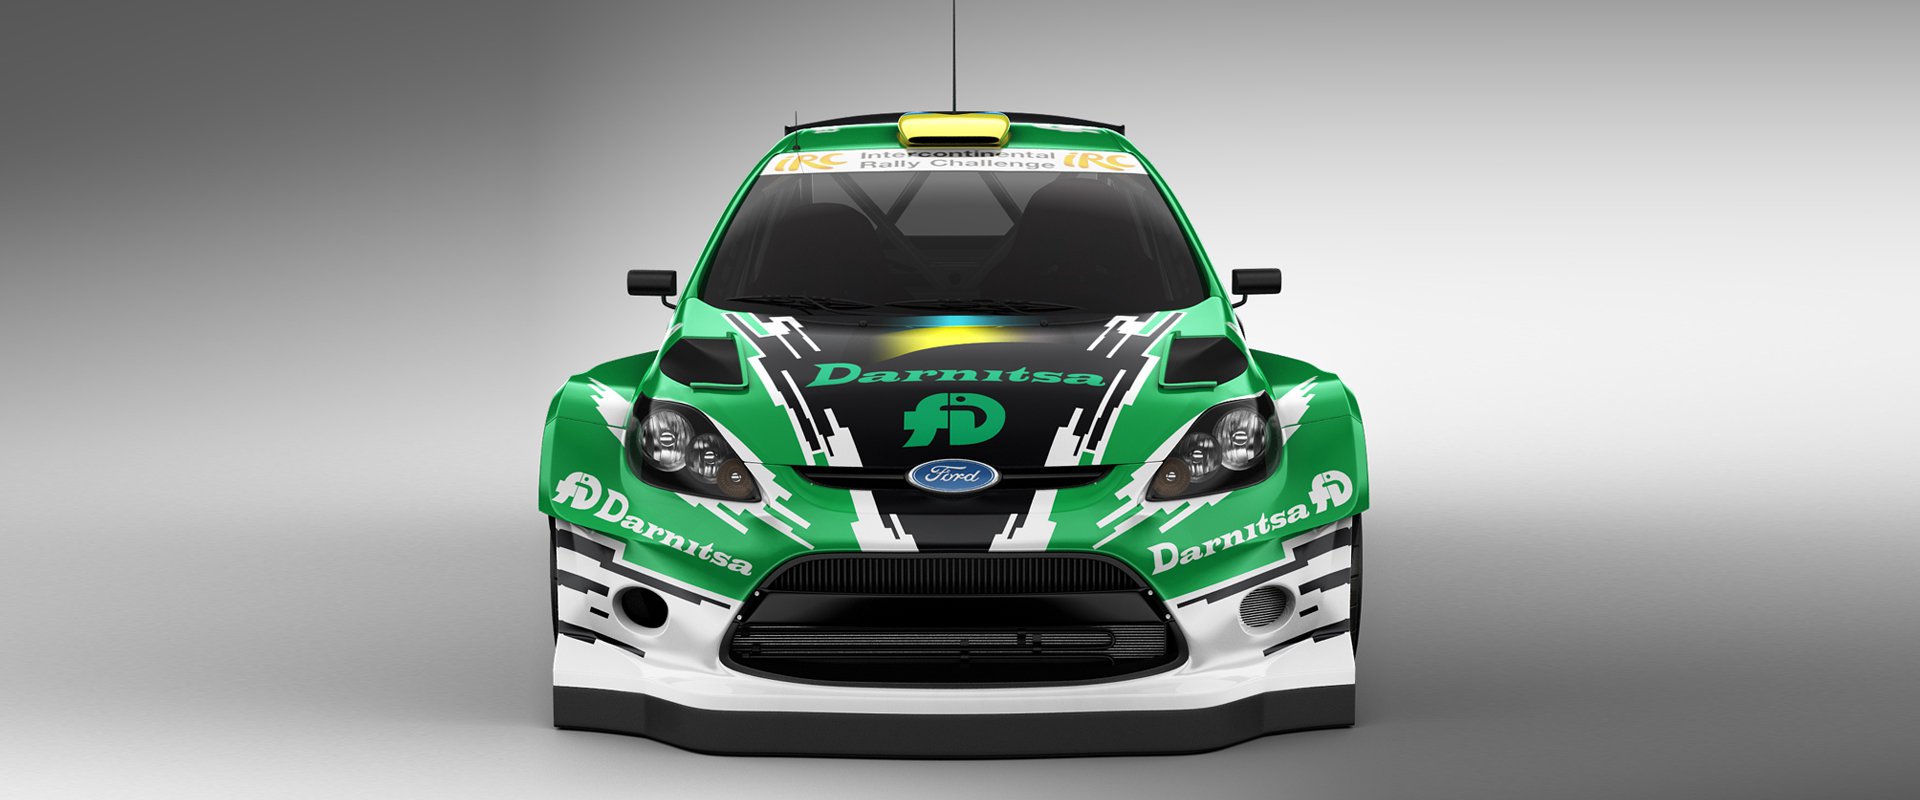 Darnitsa Motorsport #3